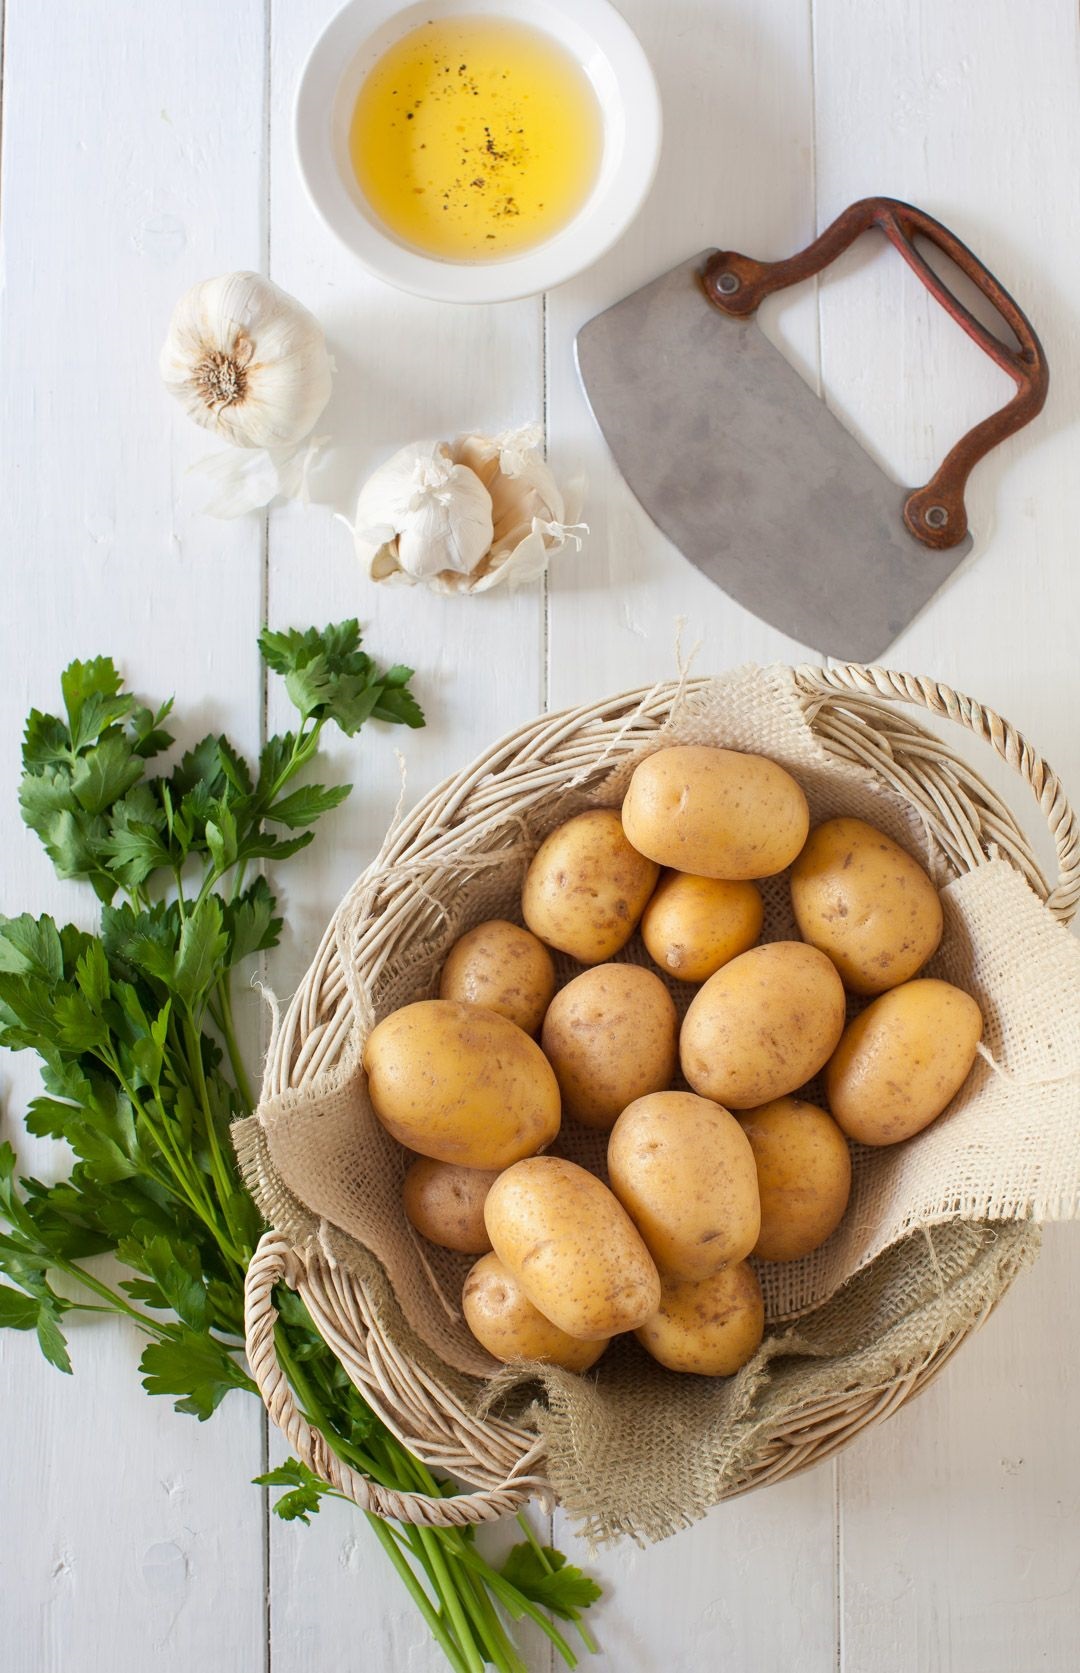 potato is the source of biotin